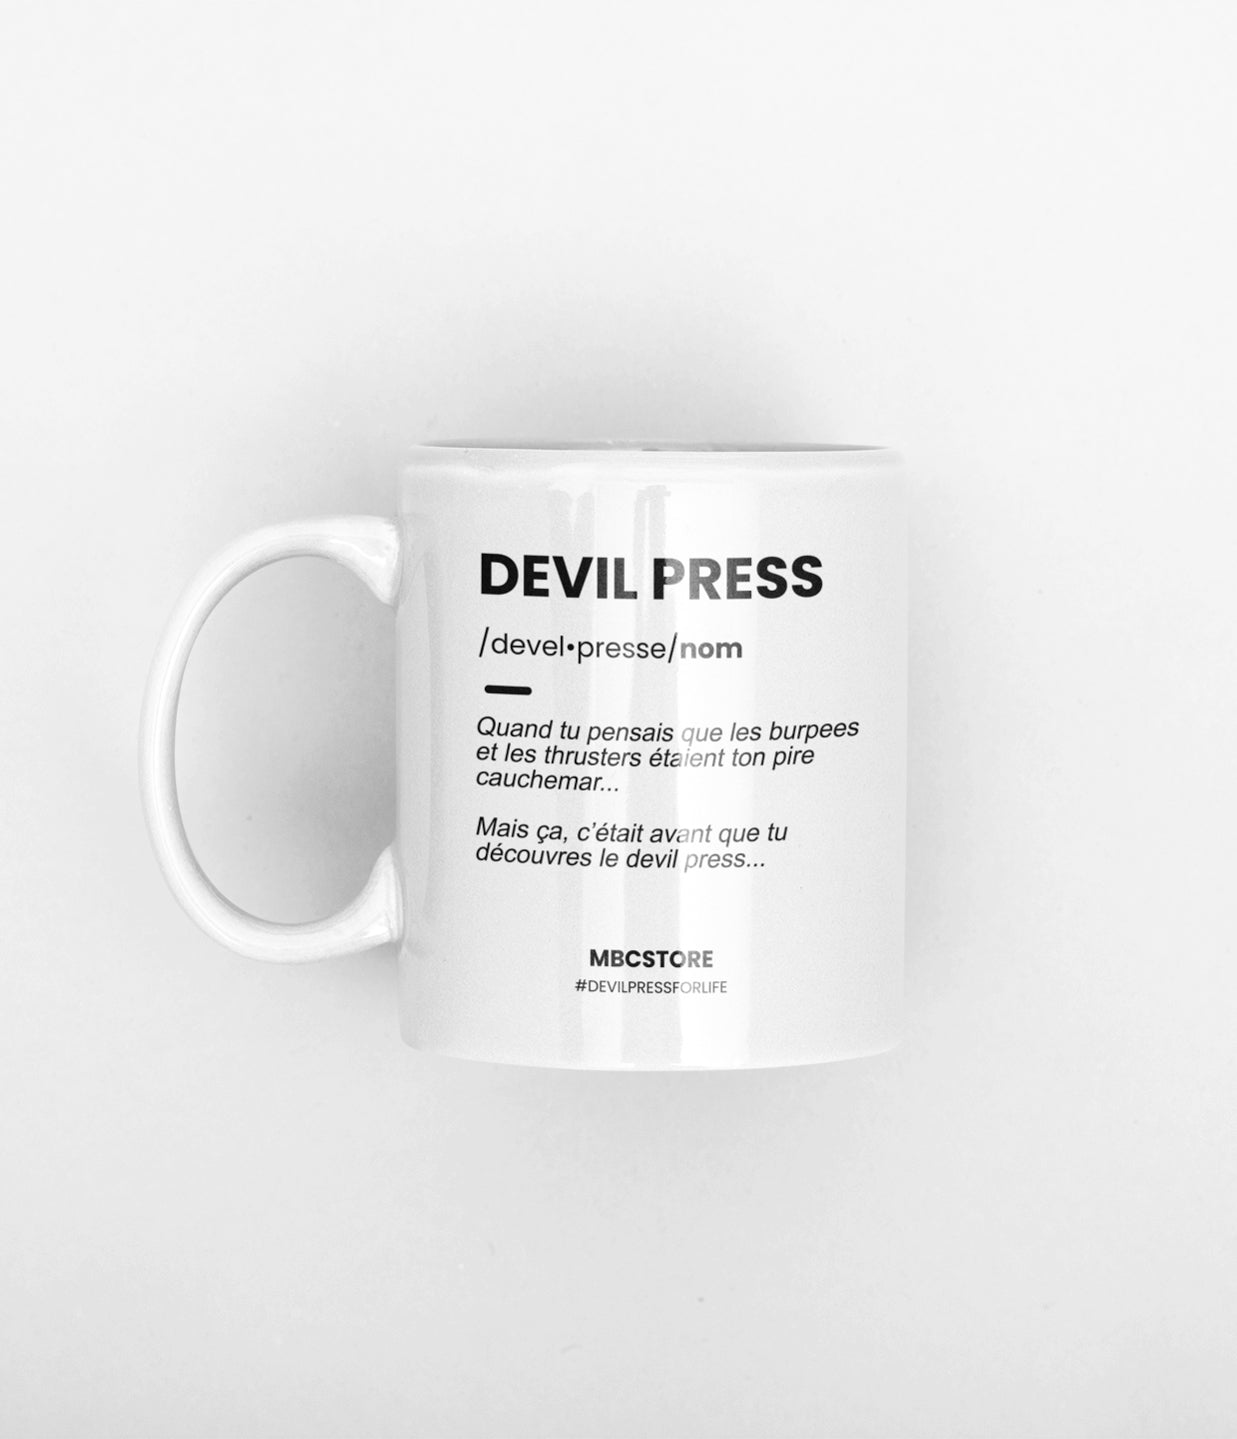 tasse devil press mbcstore